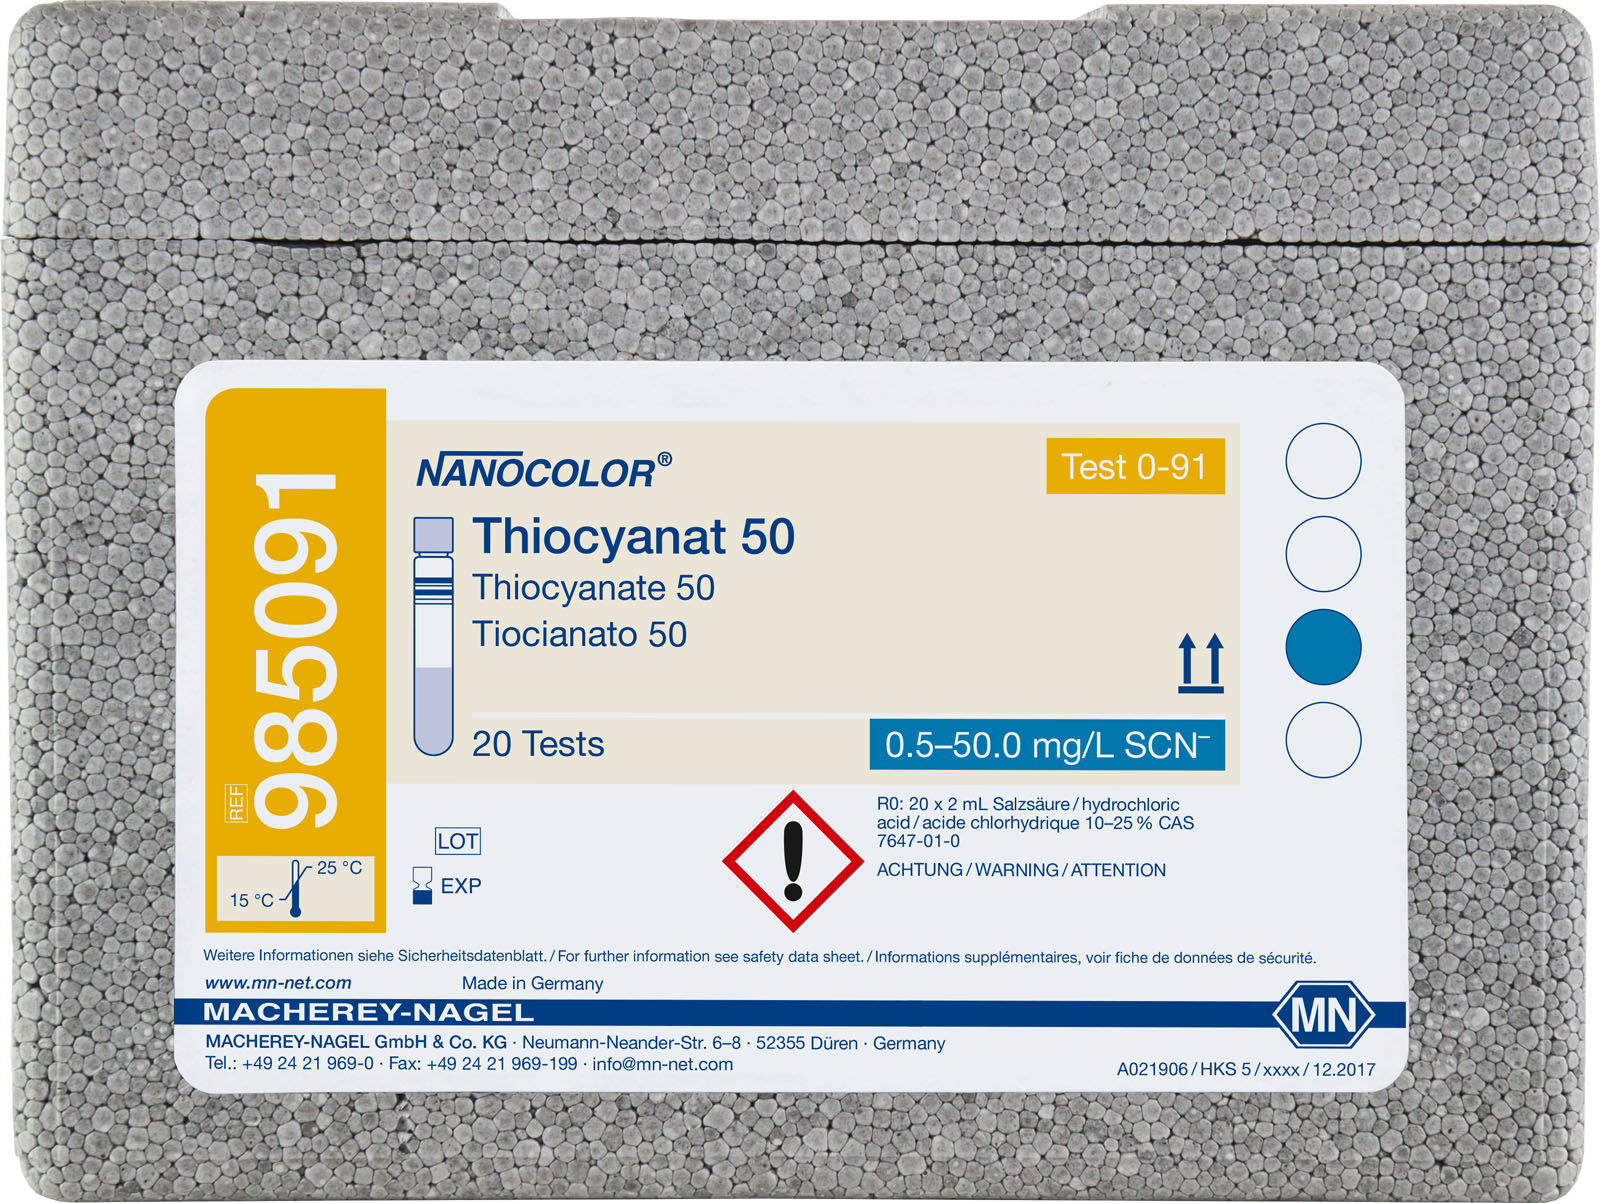 RUK NANOCOLOR-  Thiocyanat 50